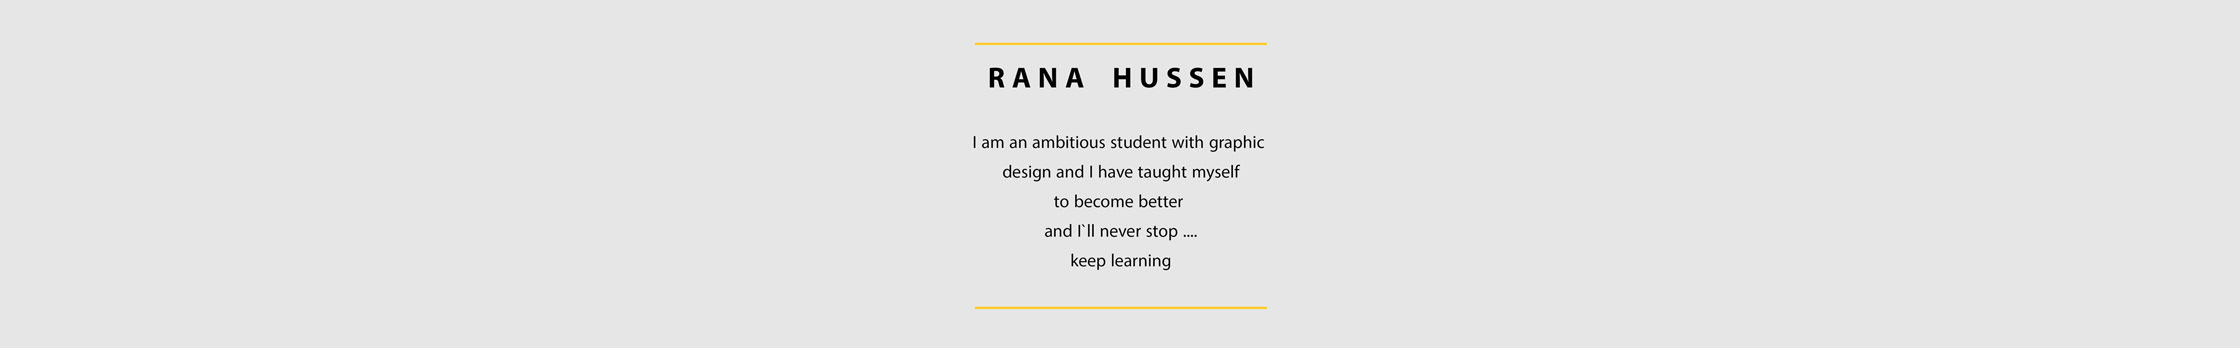 Profilbanneret til Rana Hussen